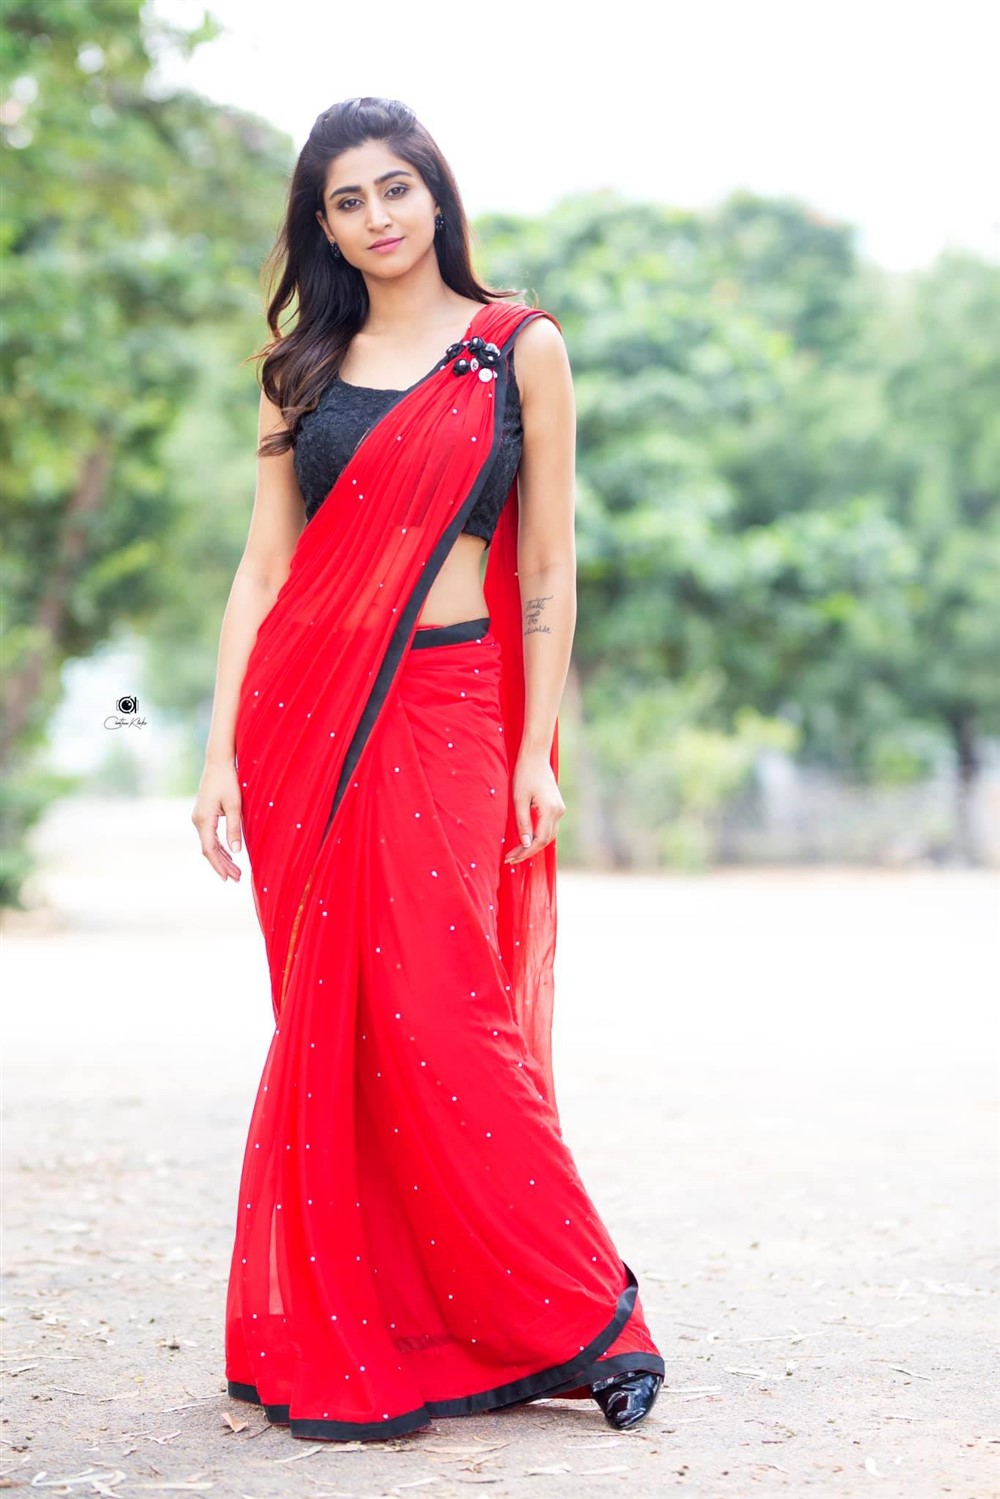 Actress Varshini Sounderajan Photoshoot Pictures | Moviegalleri.net